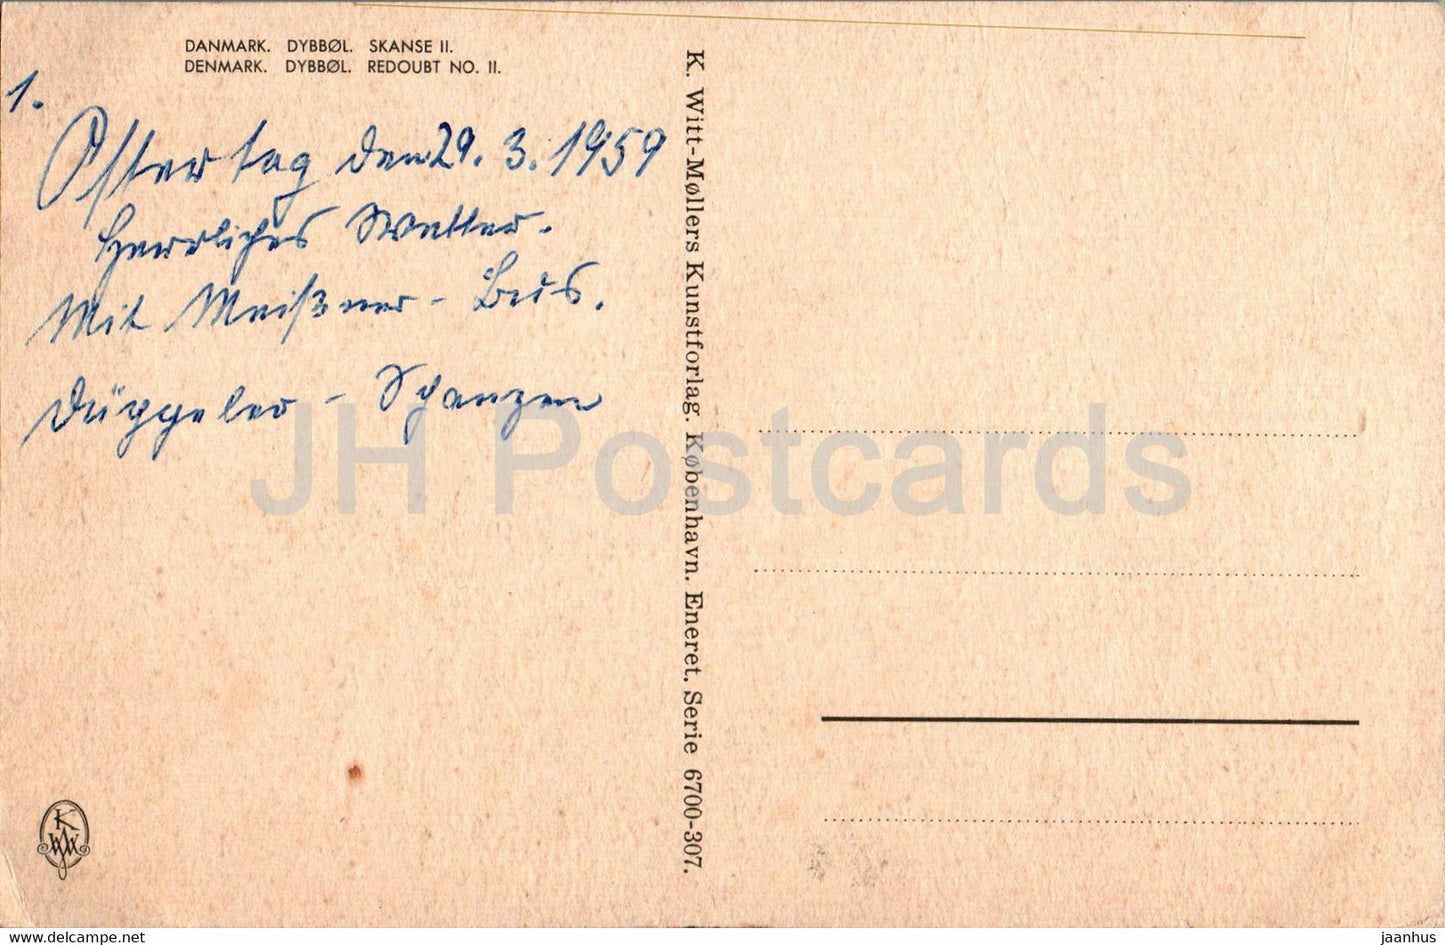 Dybbol Skanse - Redoubt Nr. 11 - alte Postkarten - 1959 - Dänemark - gebraucht